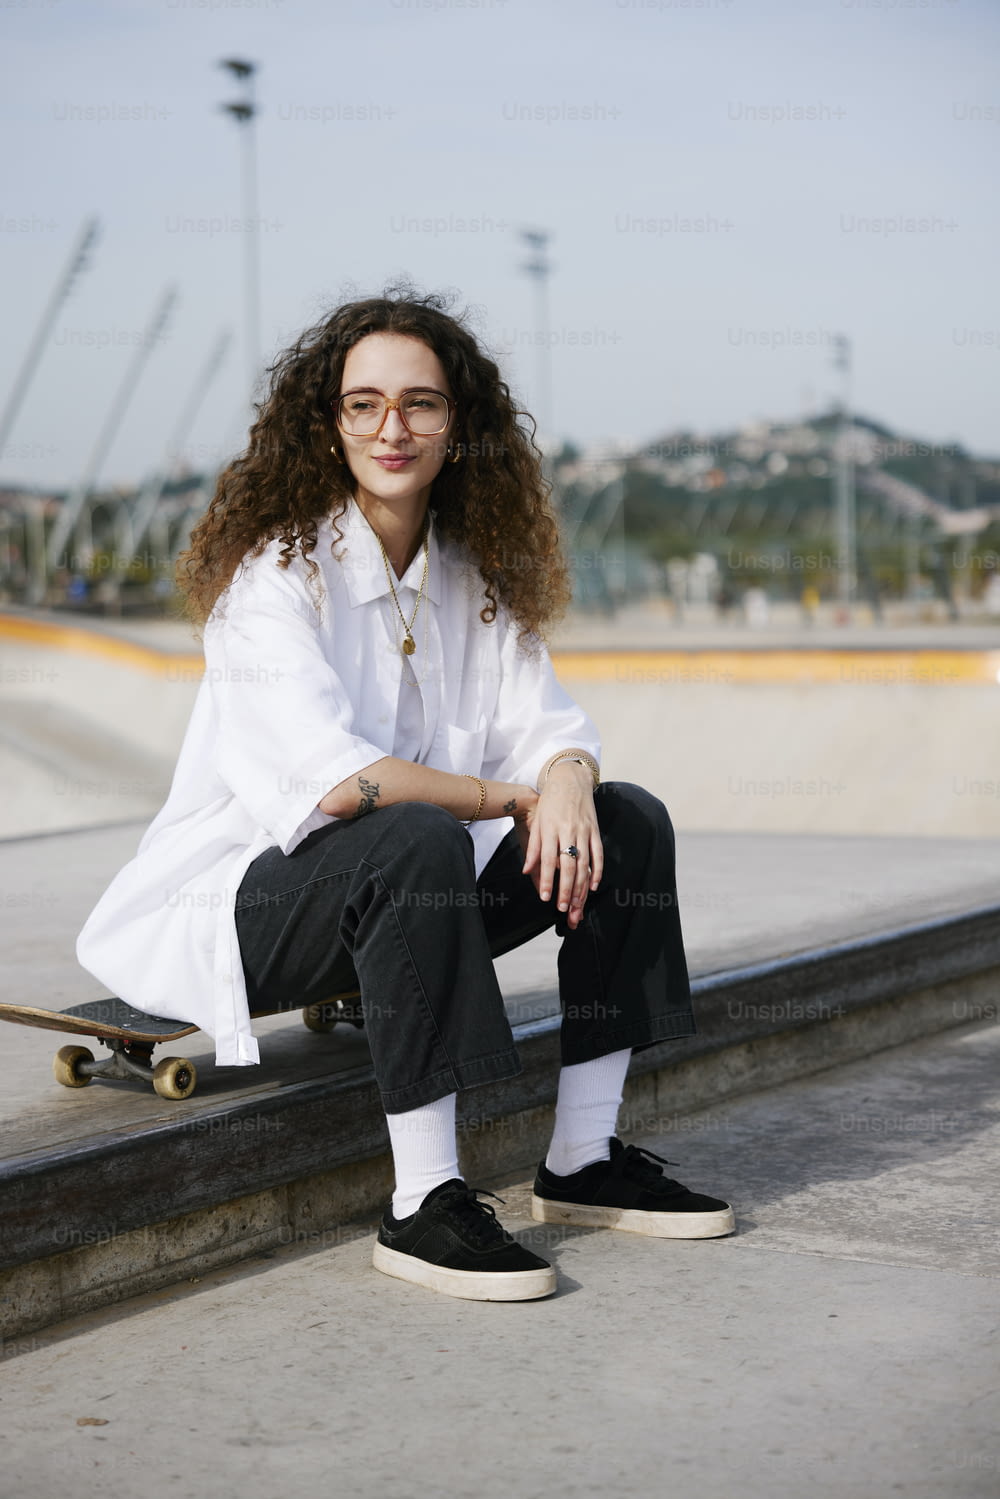 Una donna seduta su una sporgenza con uno skateboard